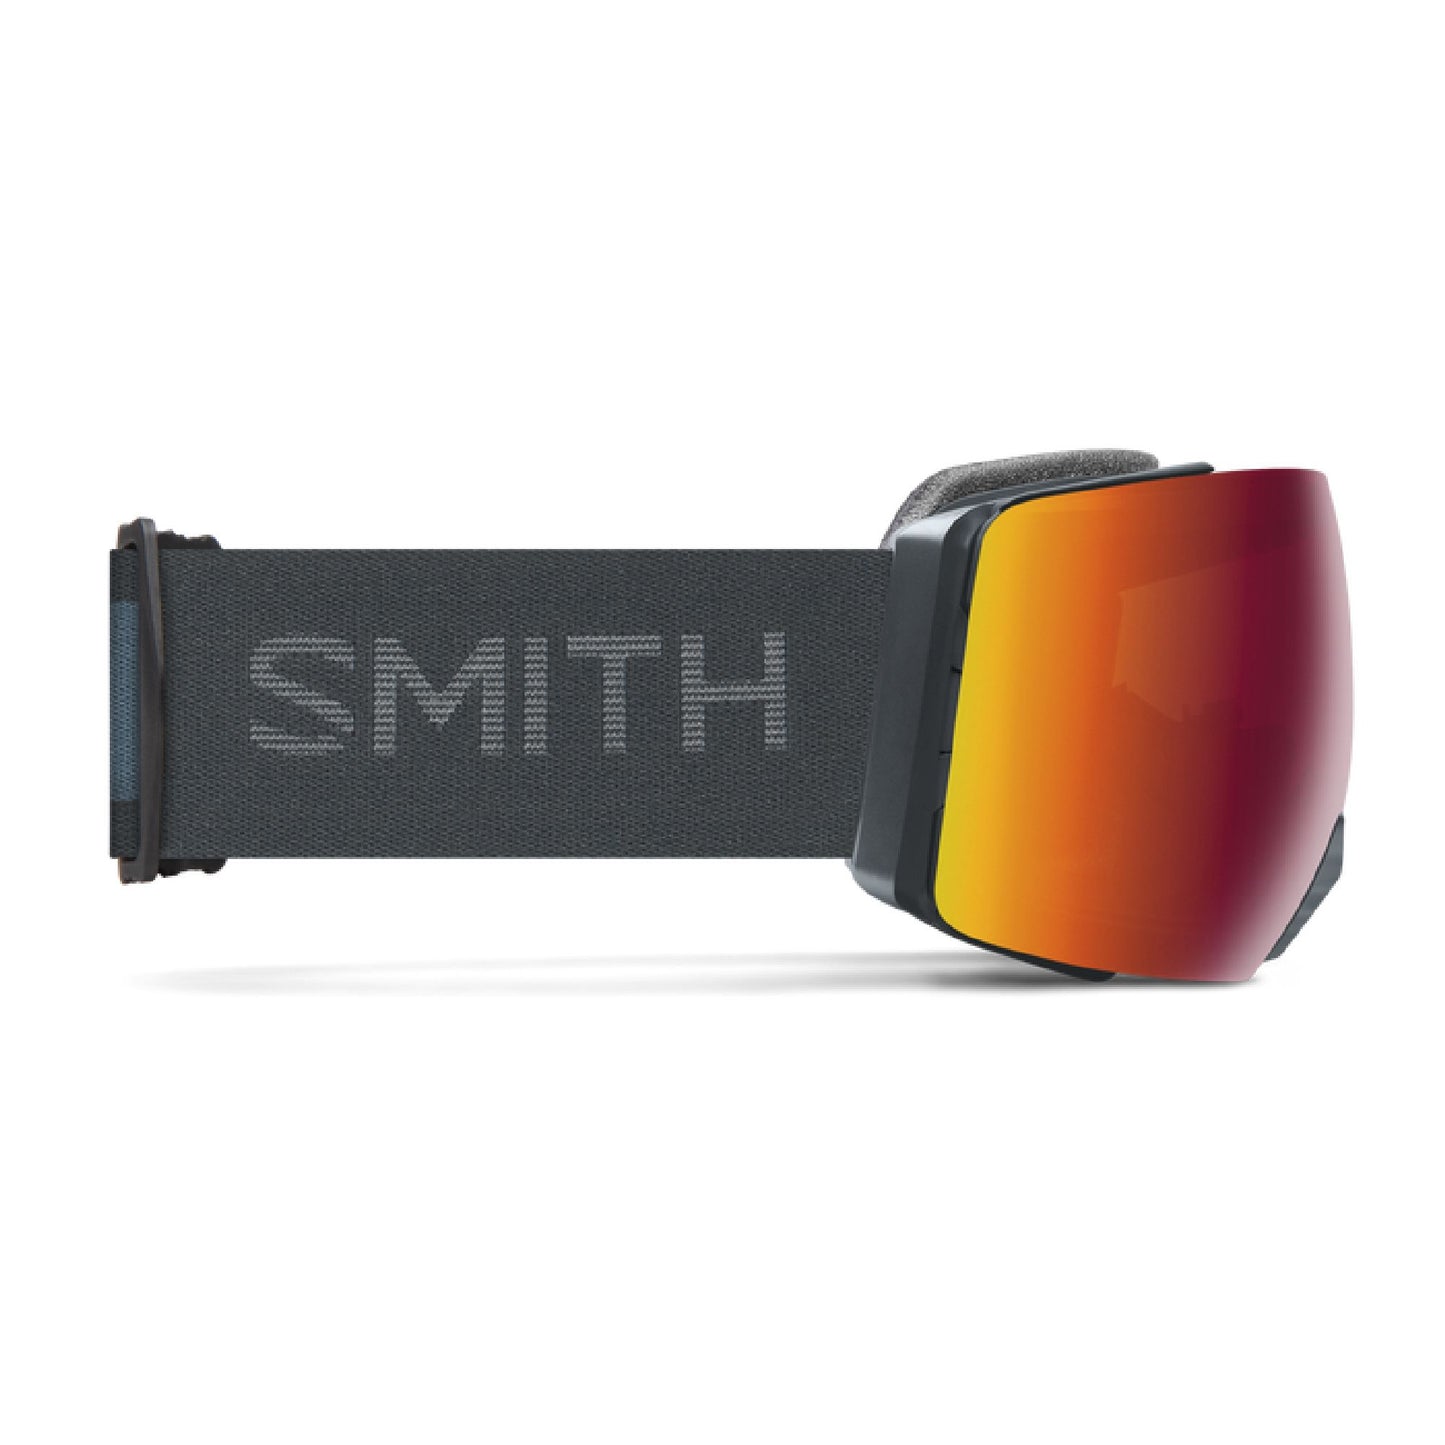 Smith I/O MAG XL Snow Goggle Slate ChromaPop Everyday Red Mirror Snow Goggles